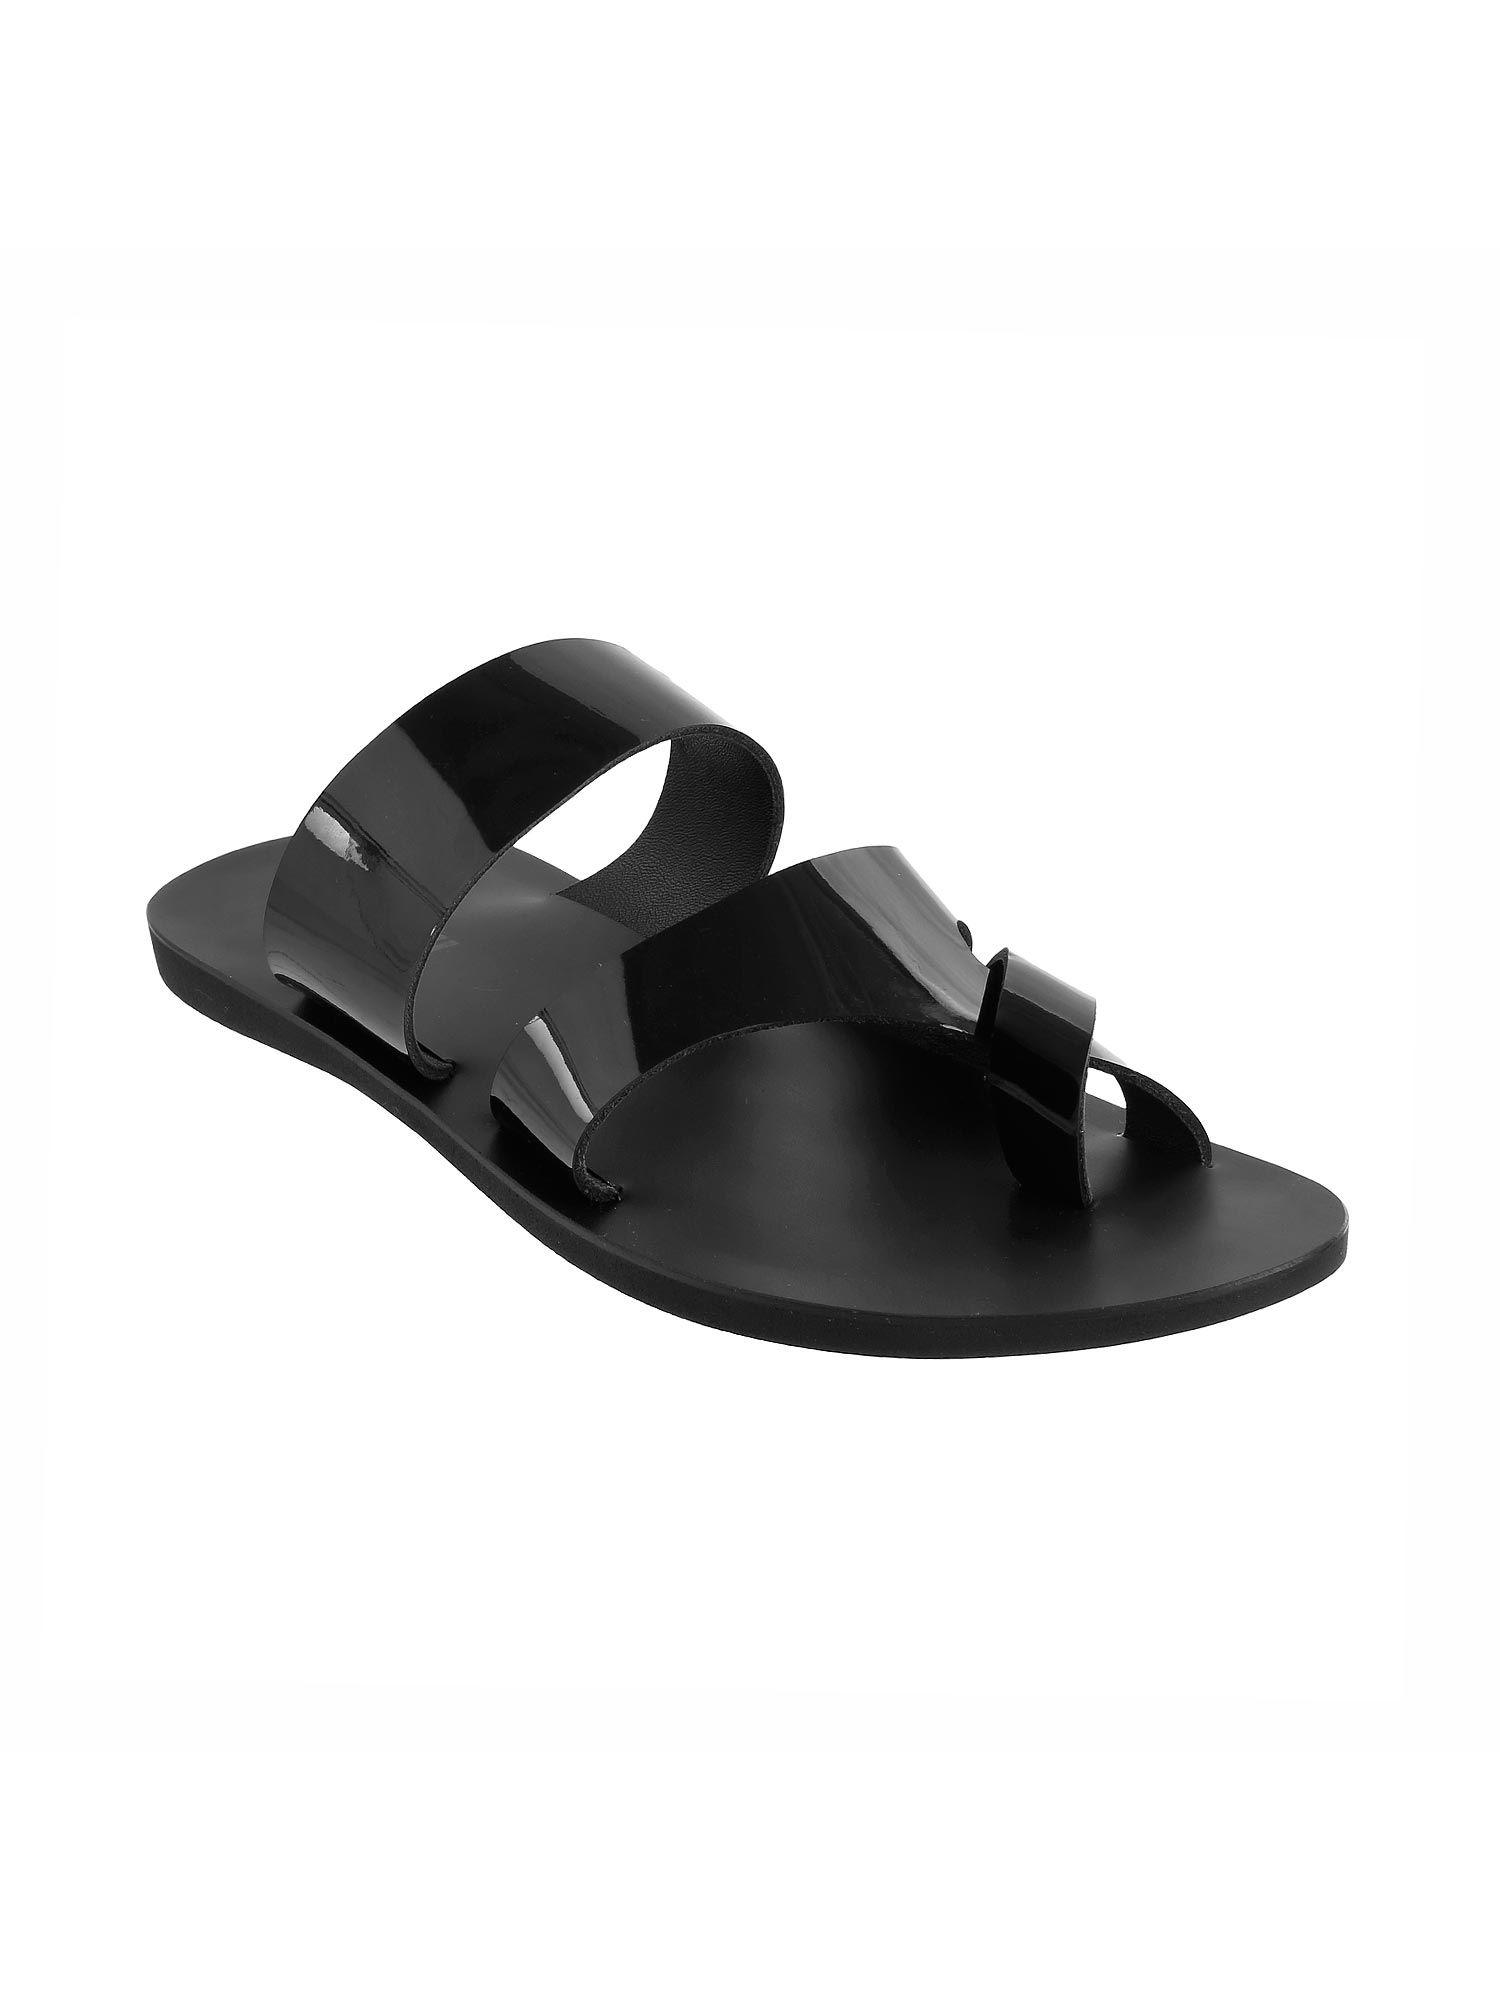 mens-black-flat-chappalsmochi-mens-black-sandals